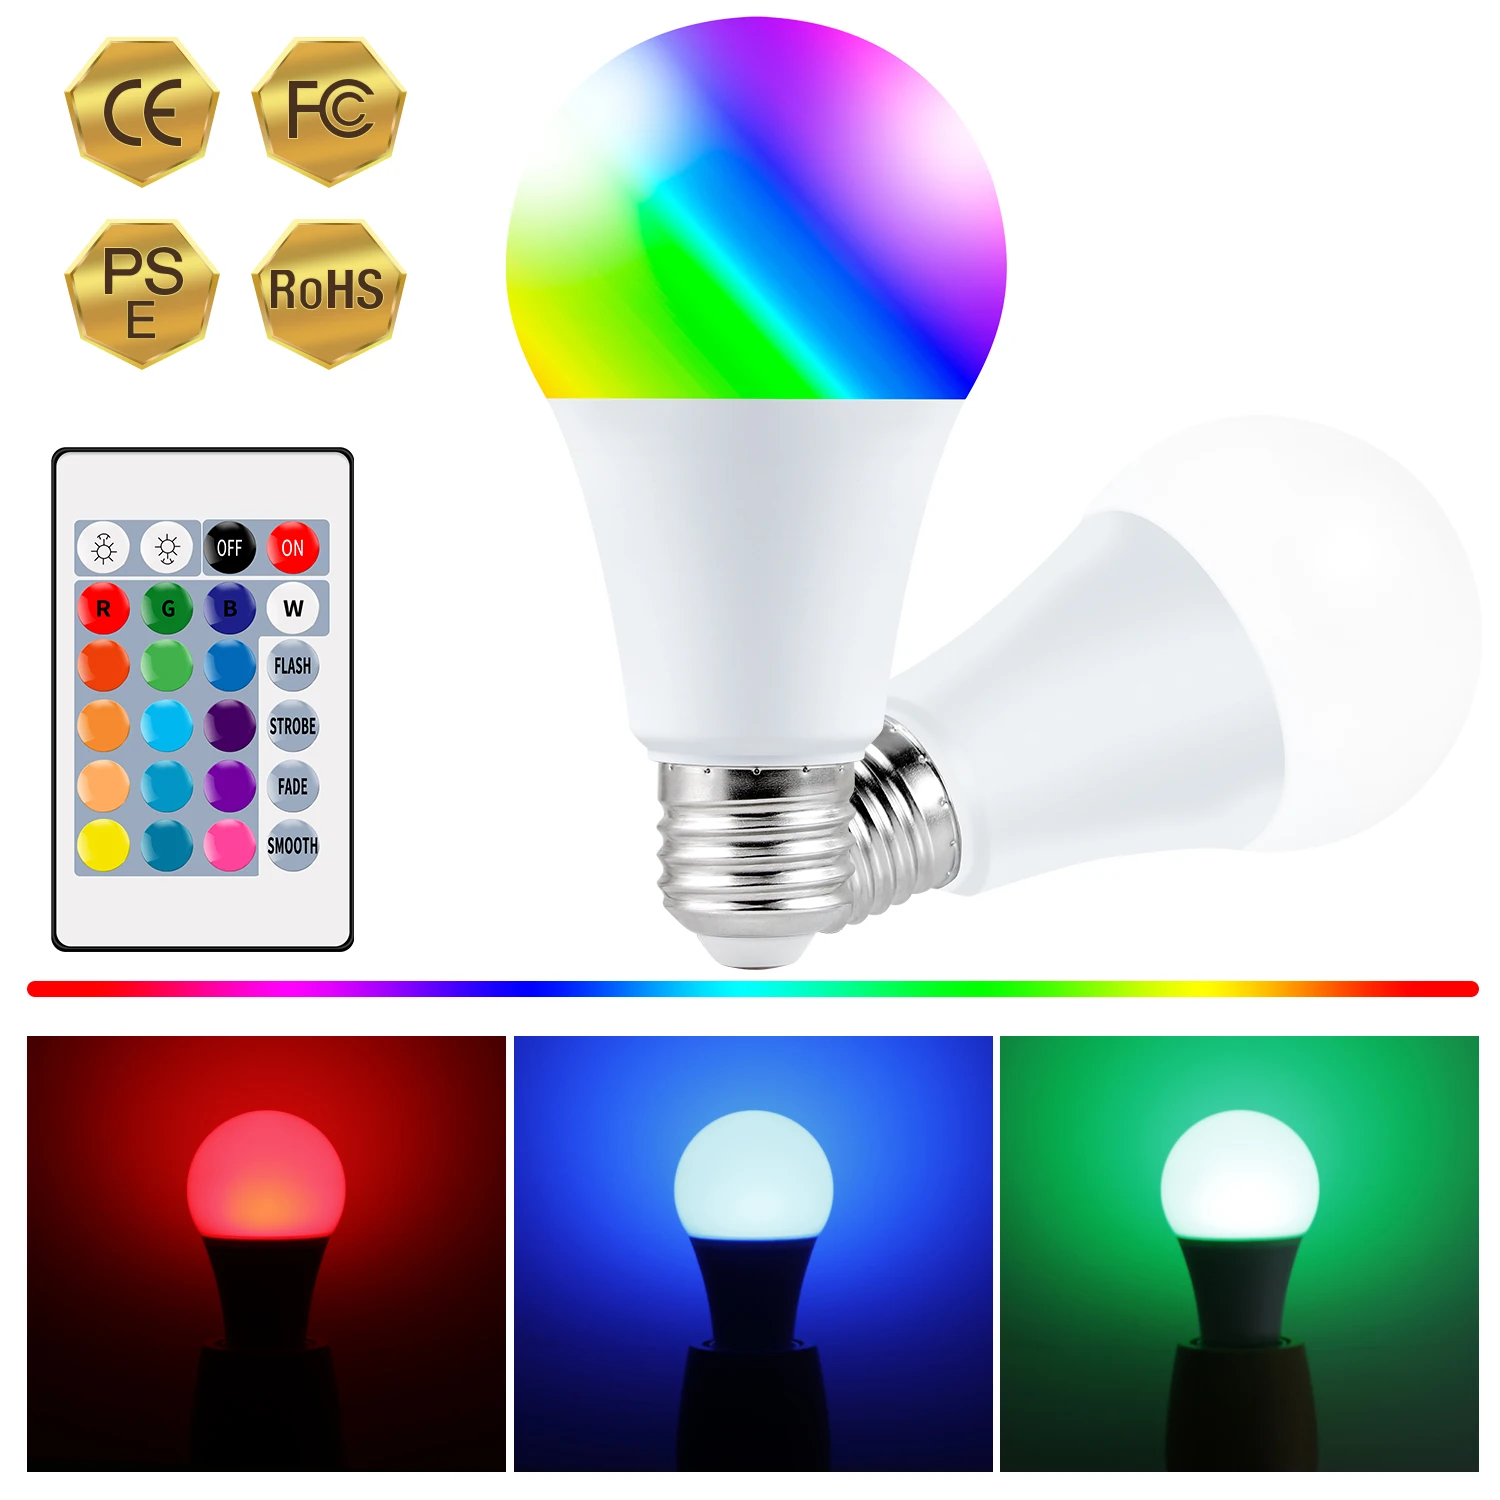 

E27 Smart Control RGB LED Lamp bulb E27 Lampada Led Light Dimmable RGBW Colorful Changing Bulb White Decor Home 5W/10W/15W a1